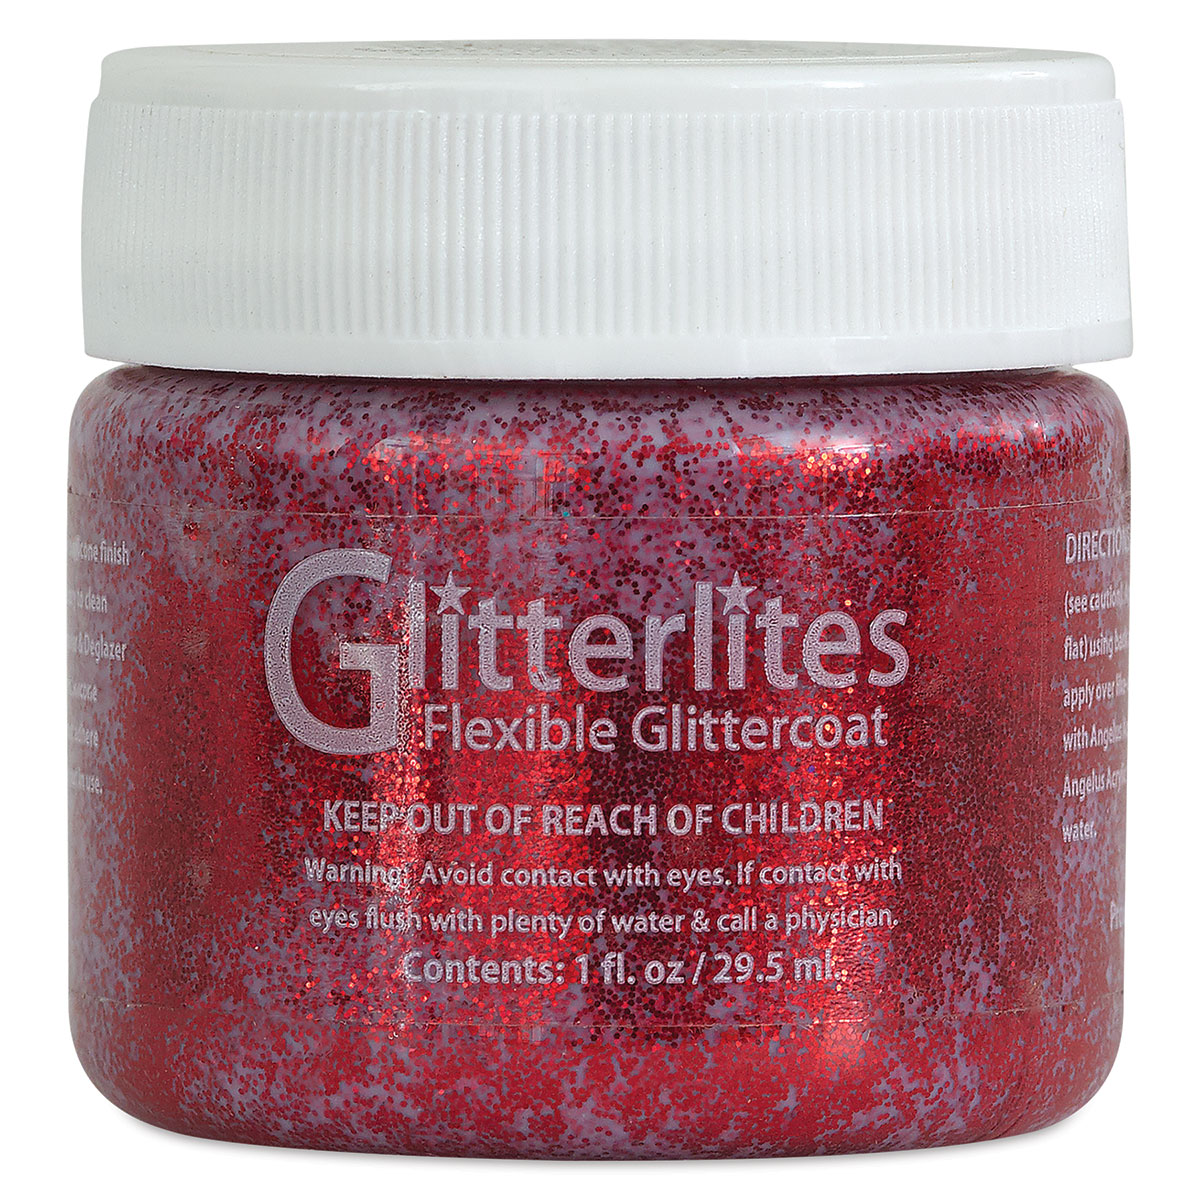 Angelus Glitterlites Flexible Glittercoat Paint - Tuxedo Black, 1 oz